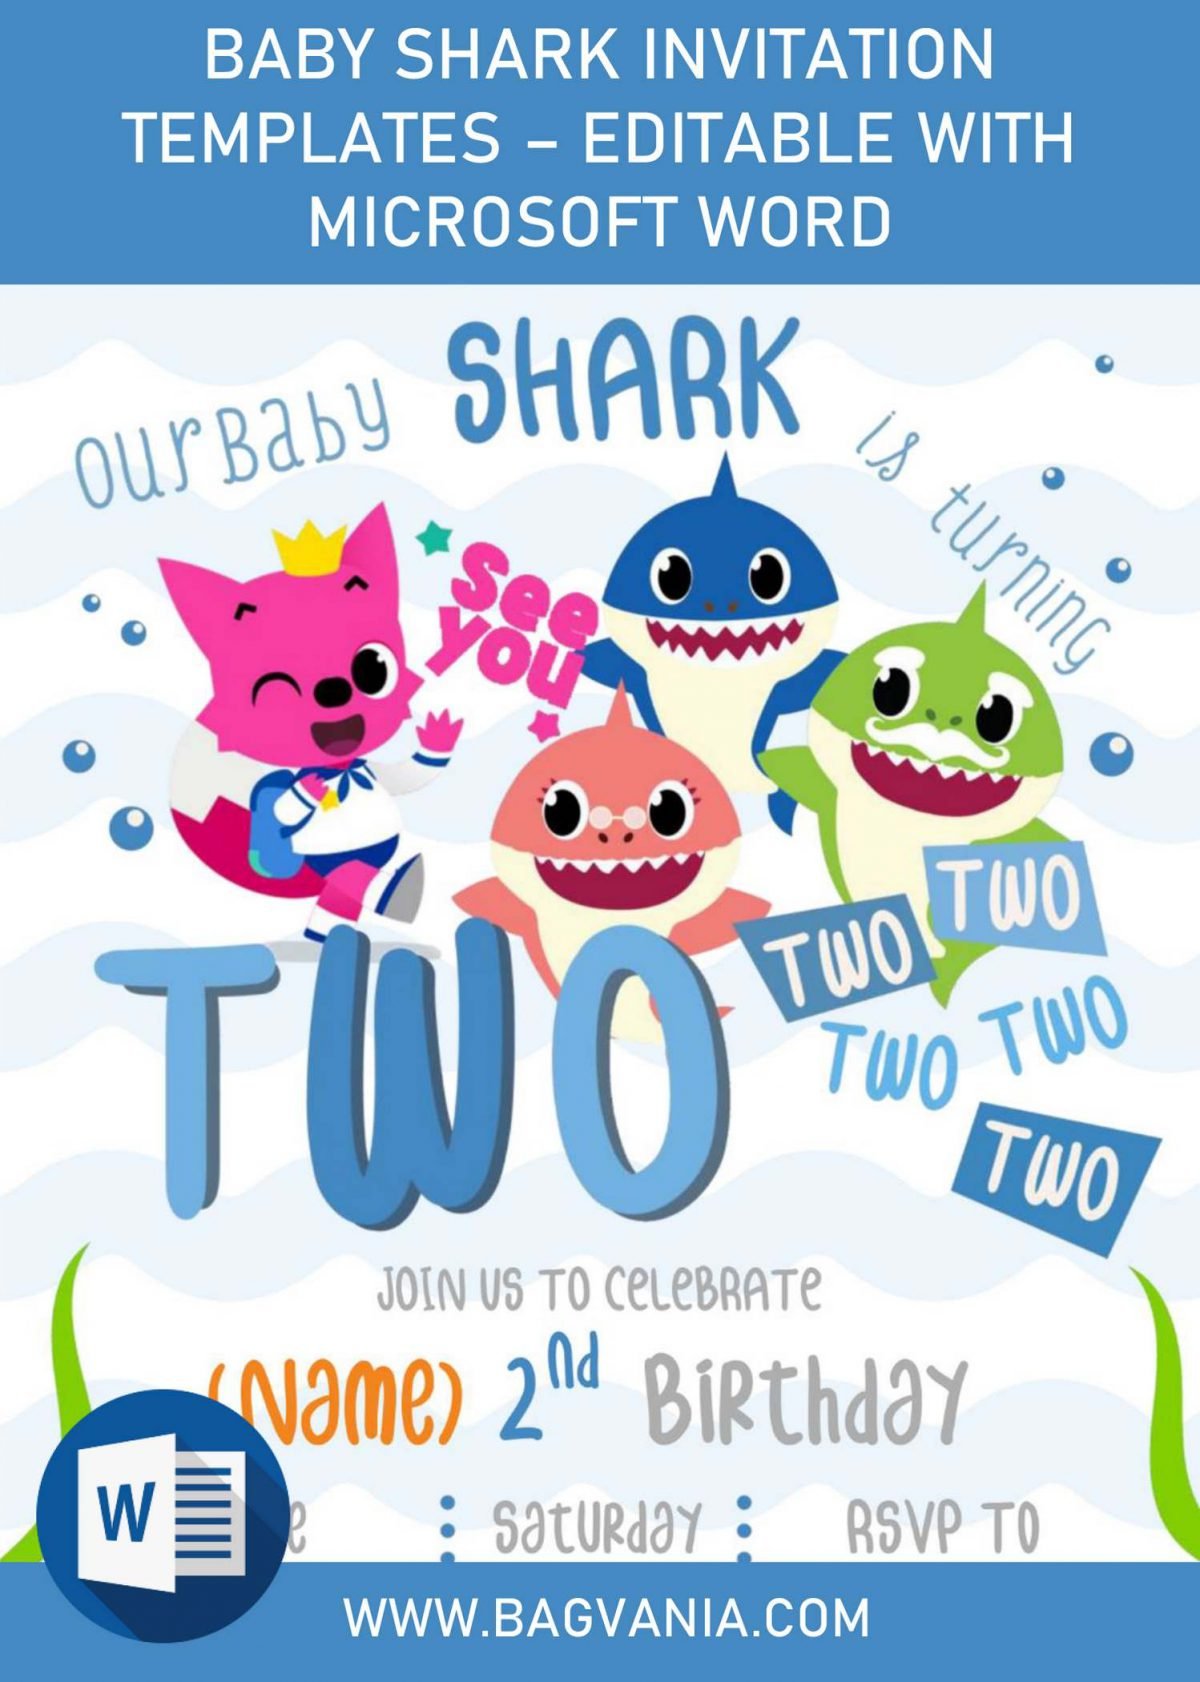 Baby Shark Birthday Invitation Templates - Editable With Microsoft Word and has 